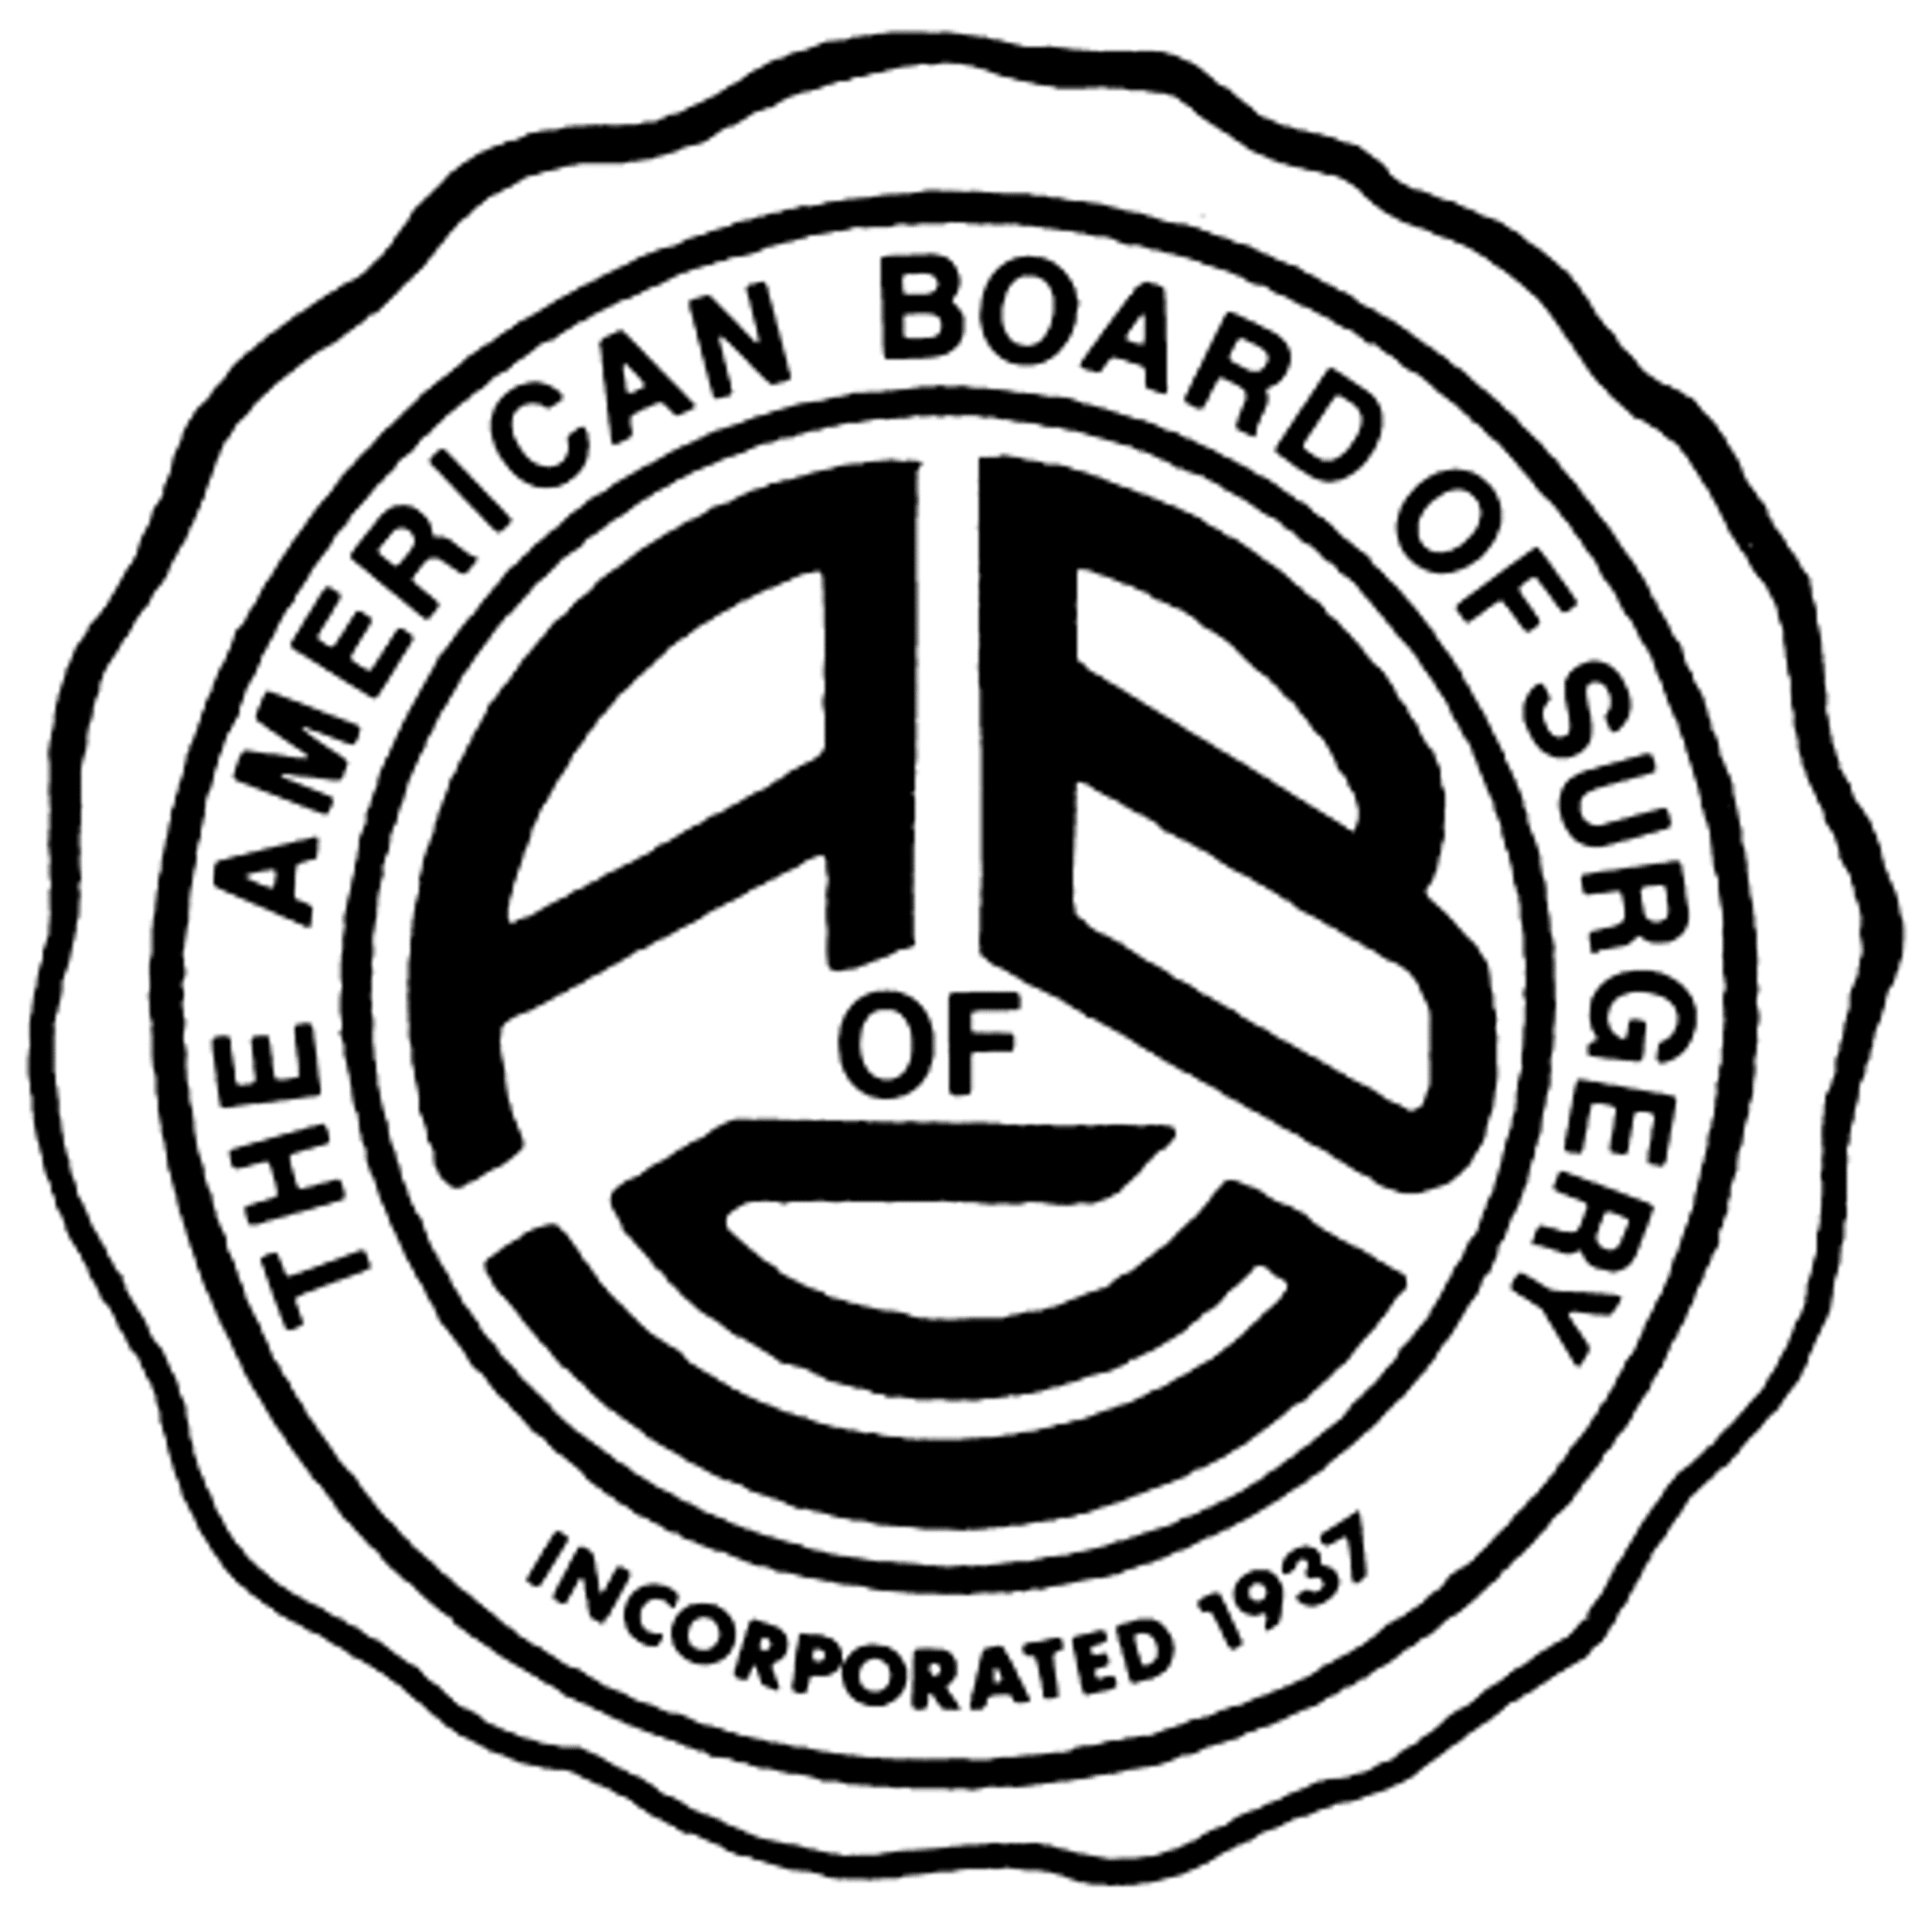 American Board of Surgery